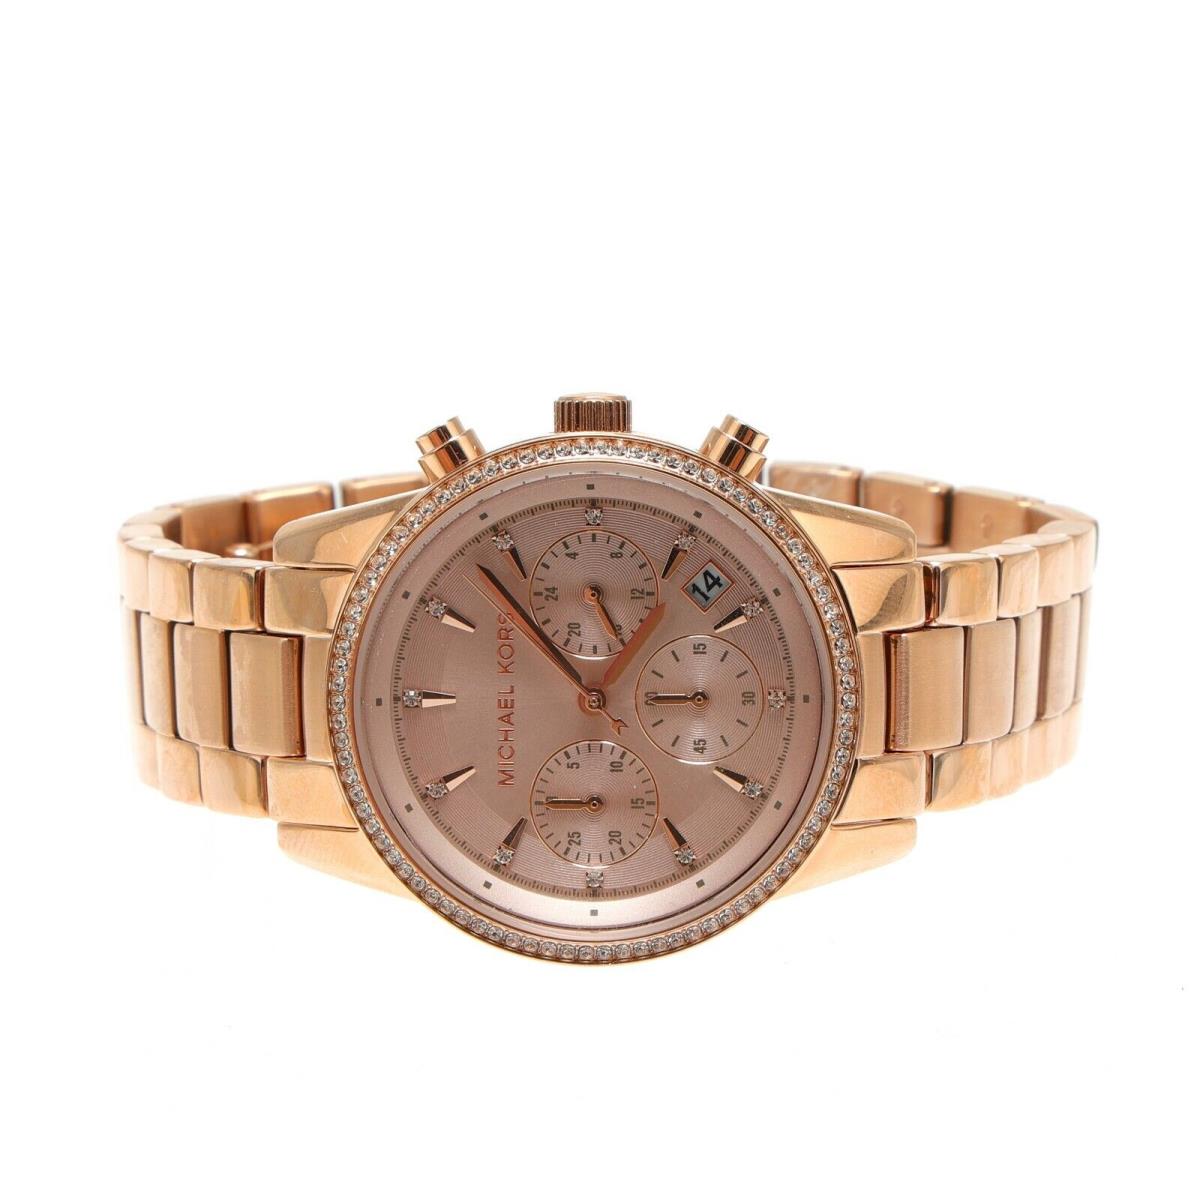 Michael Kors Ritz Chronograph Rose Gold Bracelet Watch 3205 - Rose Gold Dial, Rose Gold Band